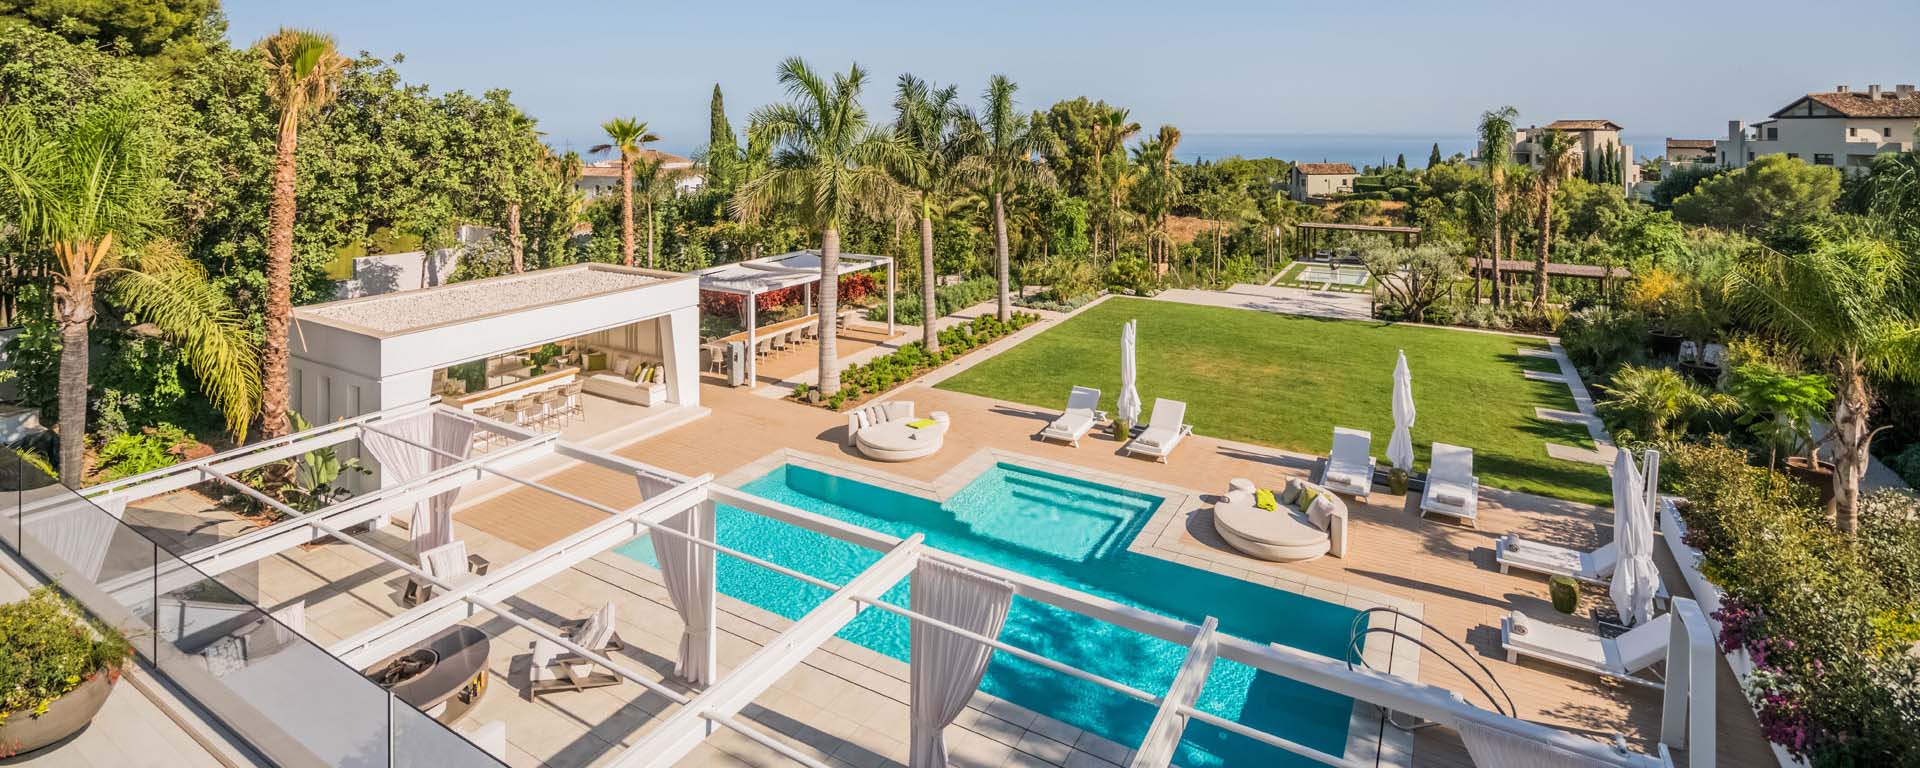 Luxus Ferienhaus Marbella - Mieten Marbella Serenity